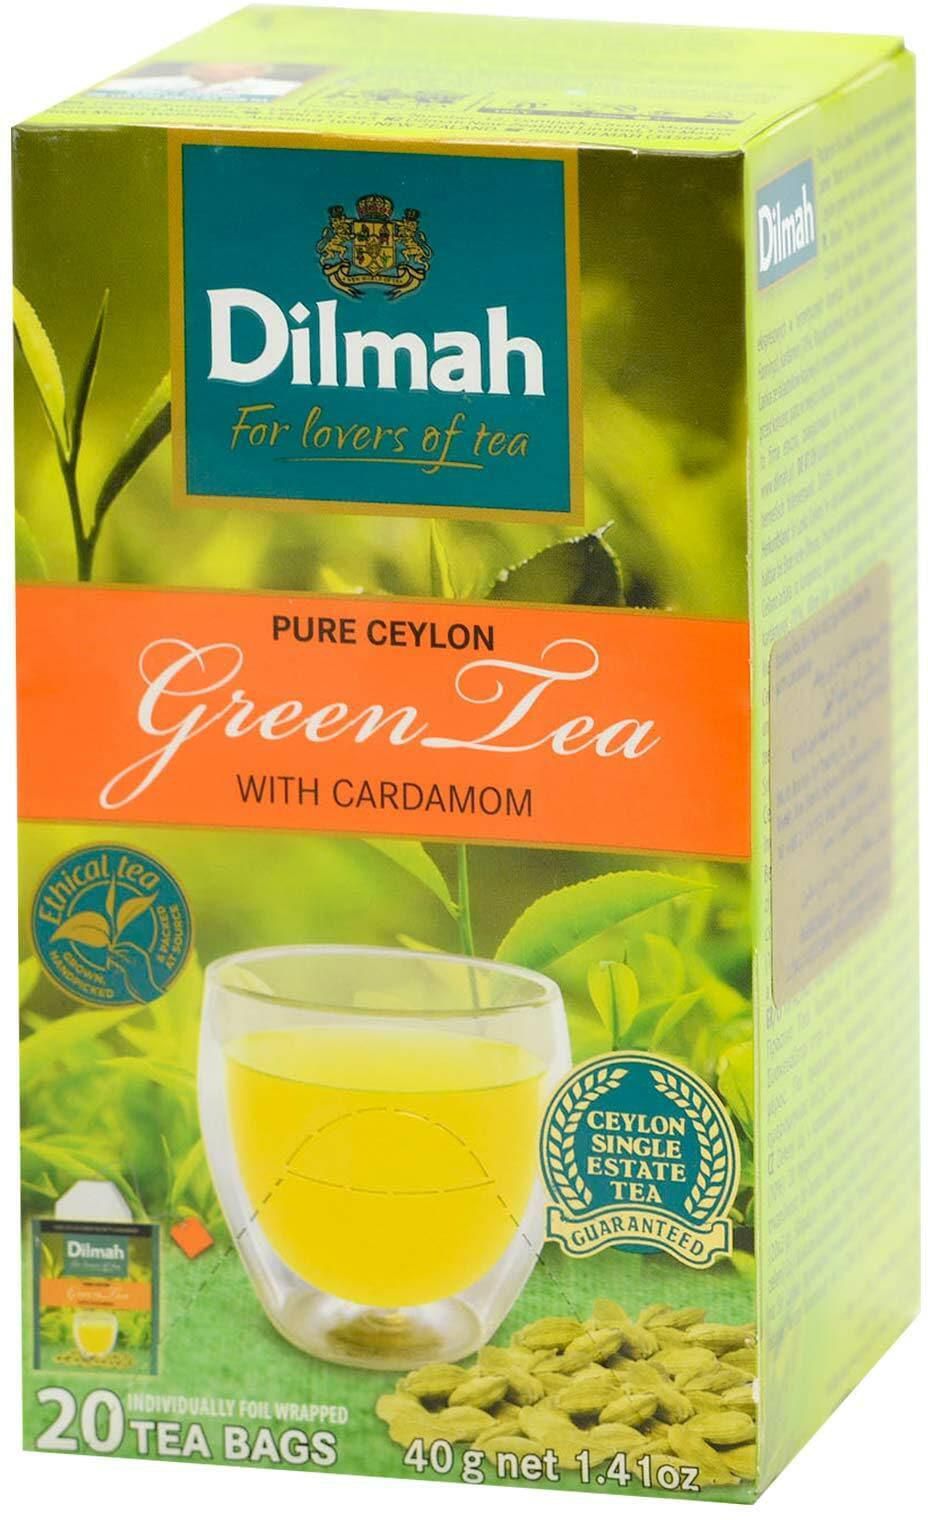 Dilmah green tea with cardamom 2 g x 20 bags